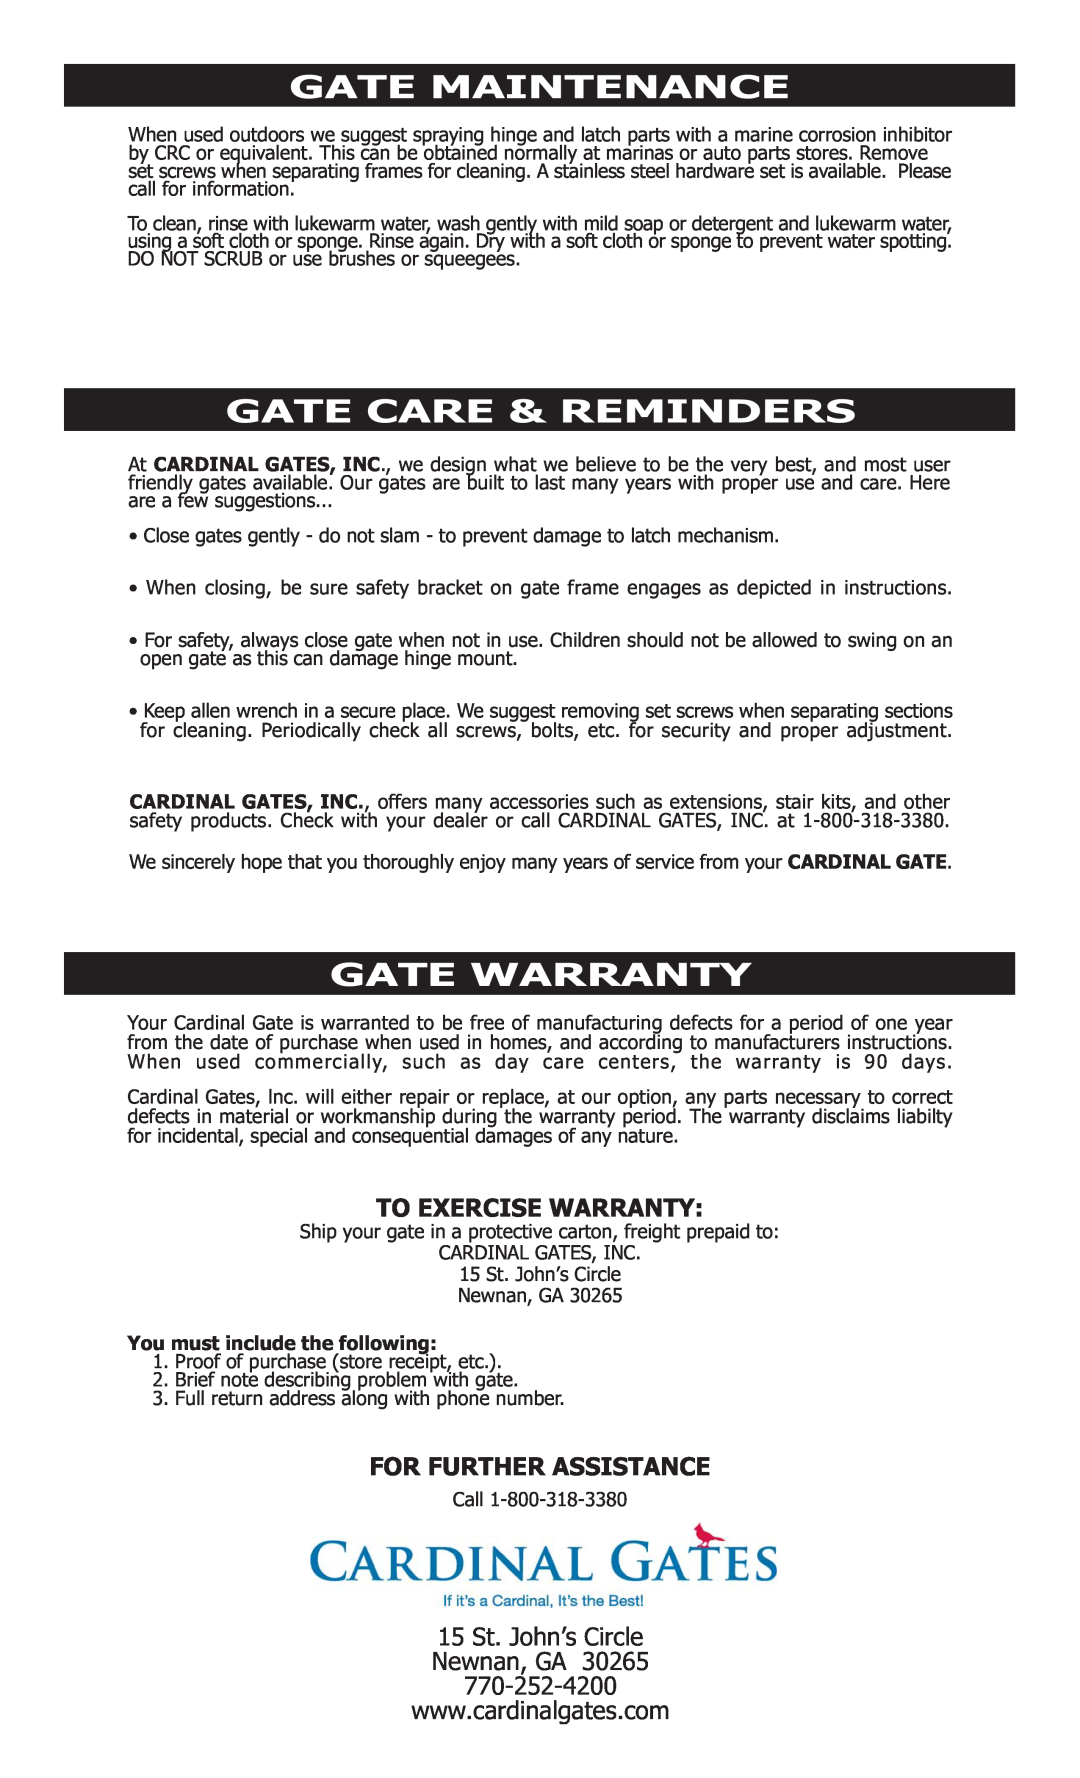 Cardinal Gates door lock manual Gate Maintenance, Gate Care & Reminders, Gate Warranty, To Exercise Warranty 